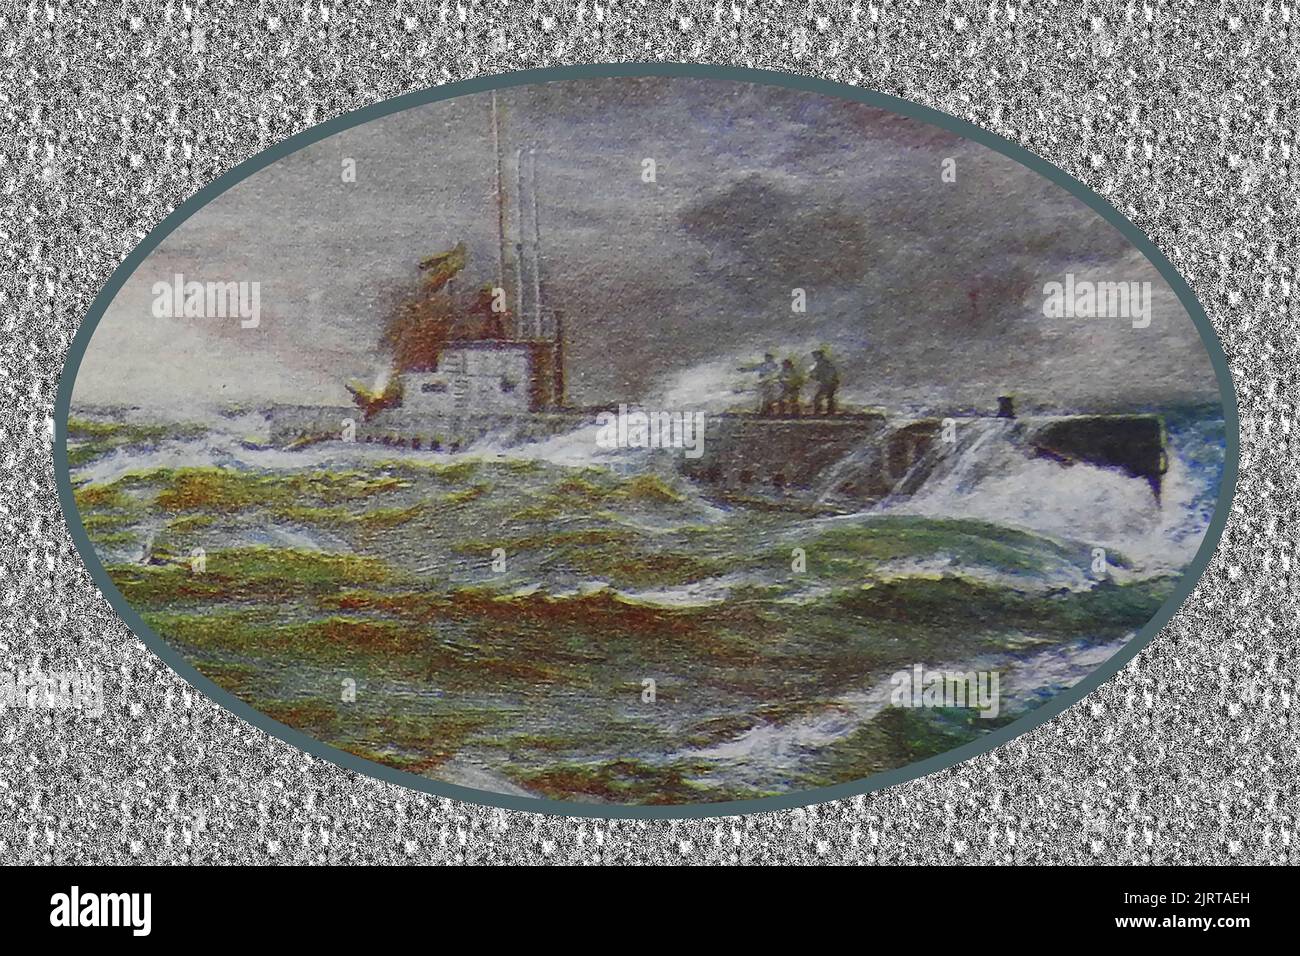 A vintage British illustration of a German submarine    ---- Eine britische Vintage-Illustration eines deutschen U-Bootes   ----  Une illustration Britannique vintage d’un sous-marin Allemand   ---   Un'illustrazione britannica vintage di un sottomarino tedesco Stock Photo